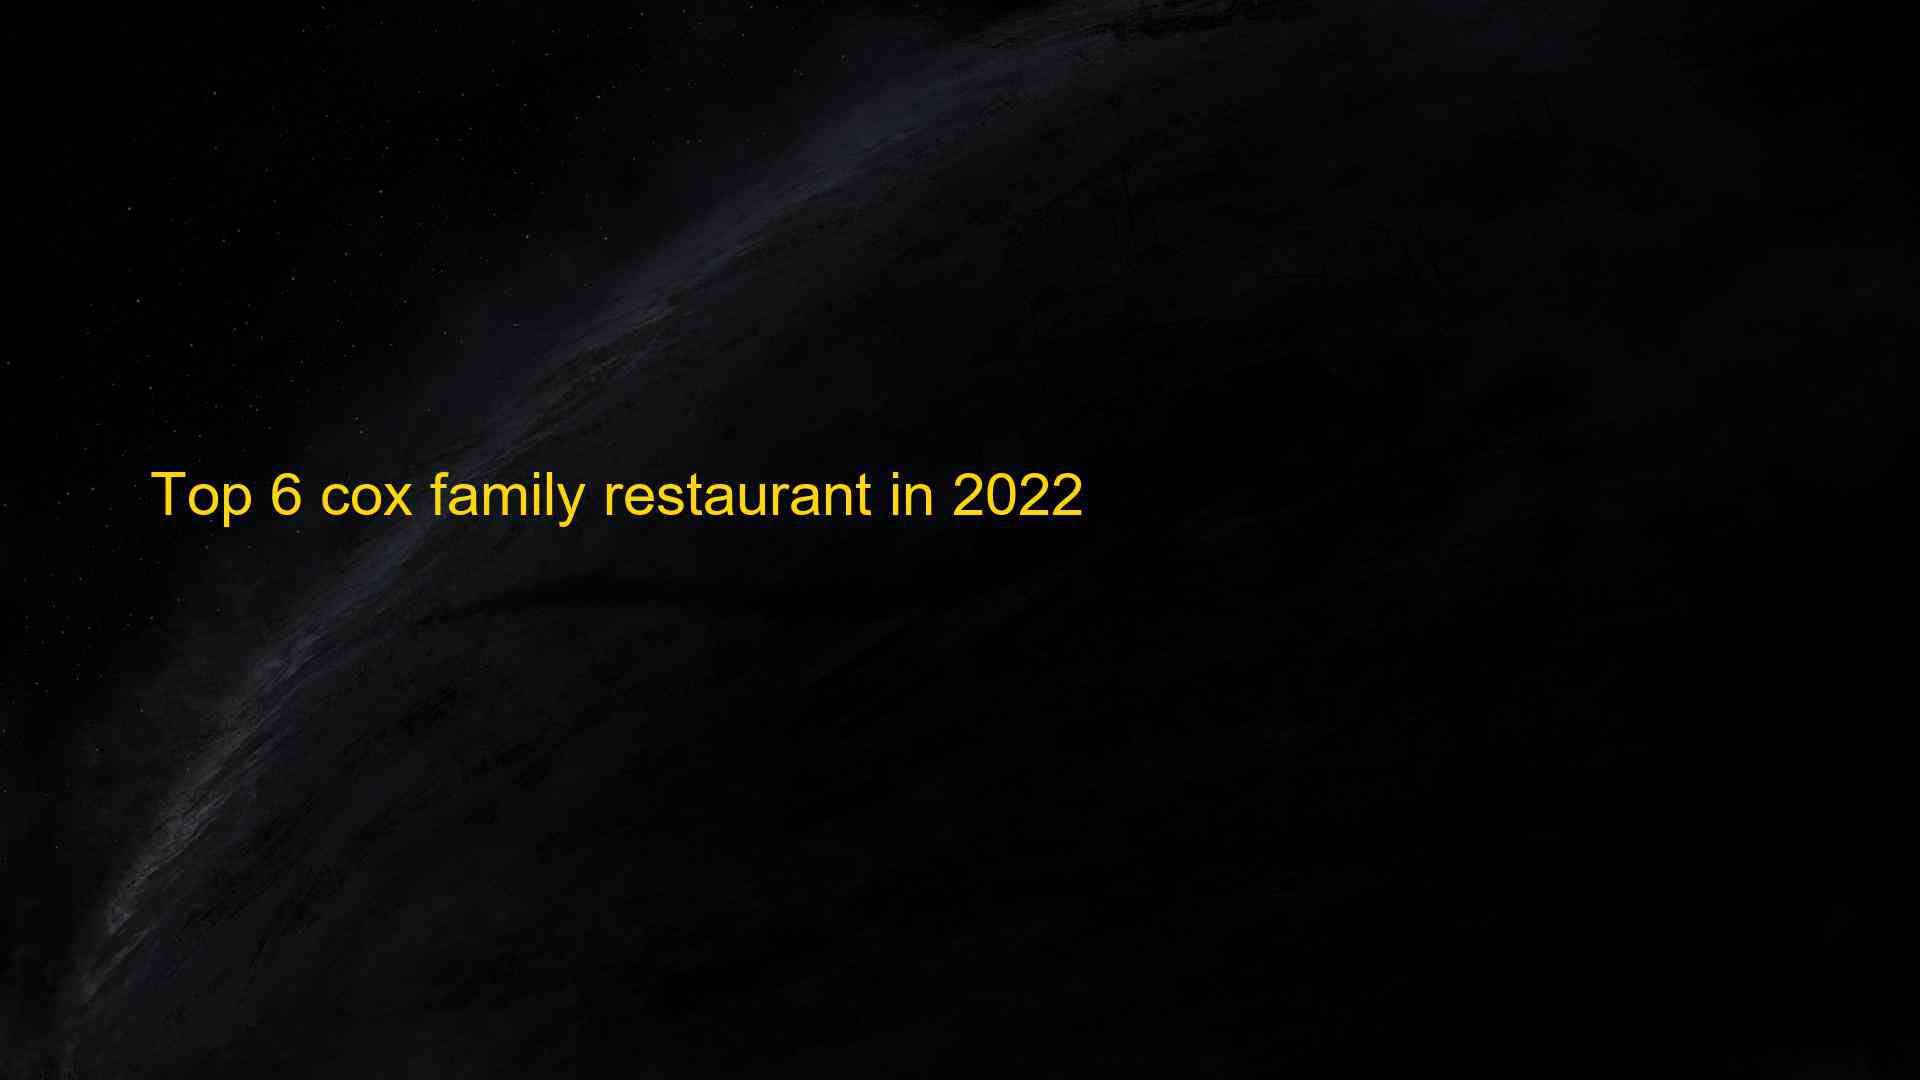 Top 6 cox family restaurant in 2022 1663002806